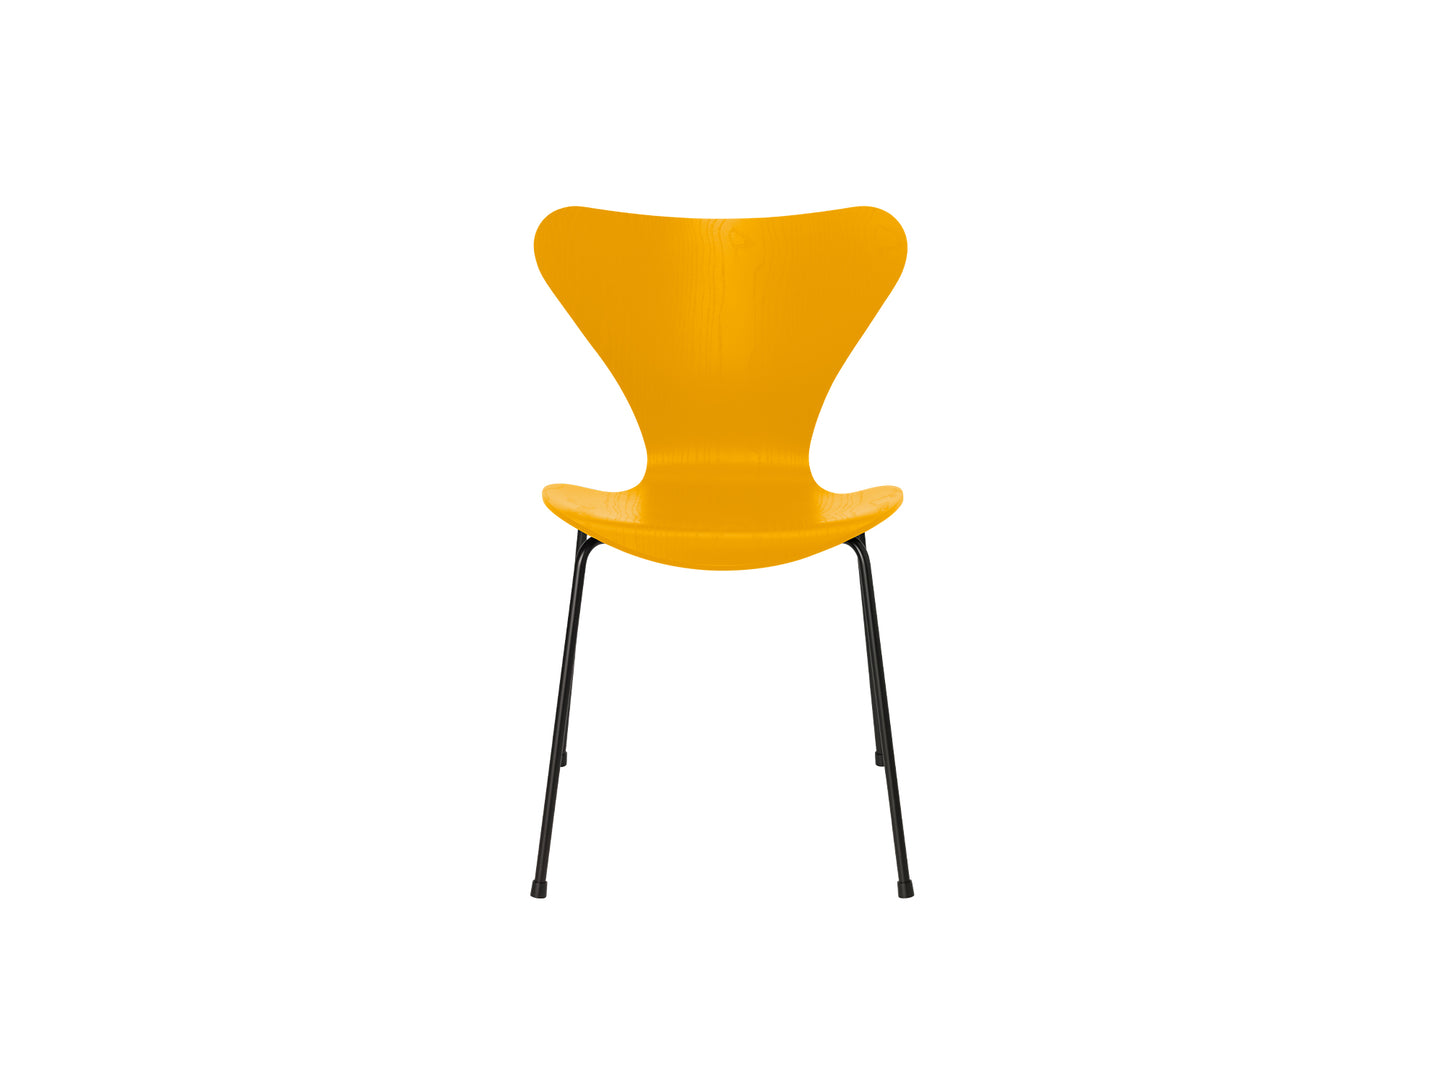 Series 7™ 3107 Dining Chair by Fritz Hansen - True Yellow Coloured Ash Veneer Shell / Black Steel